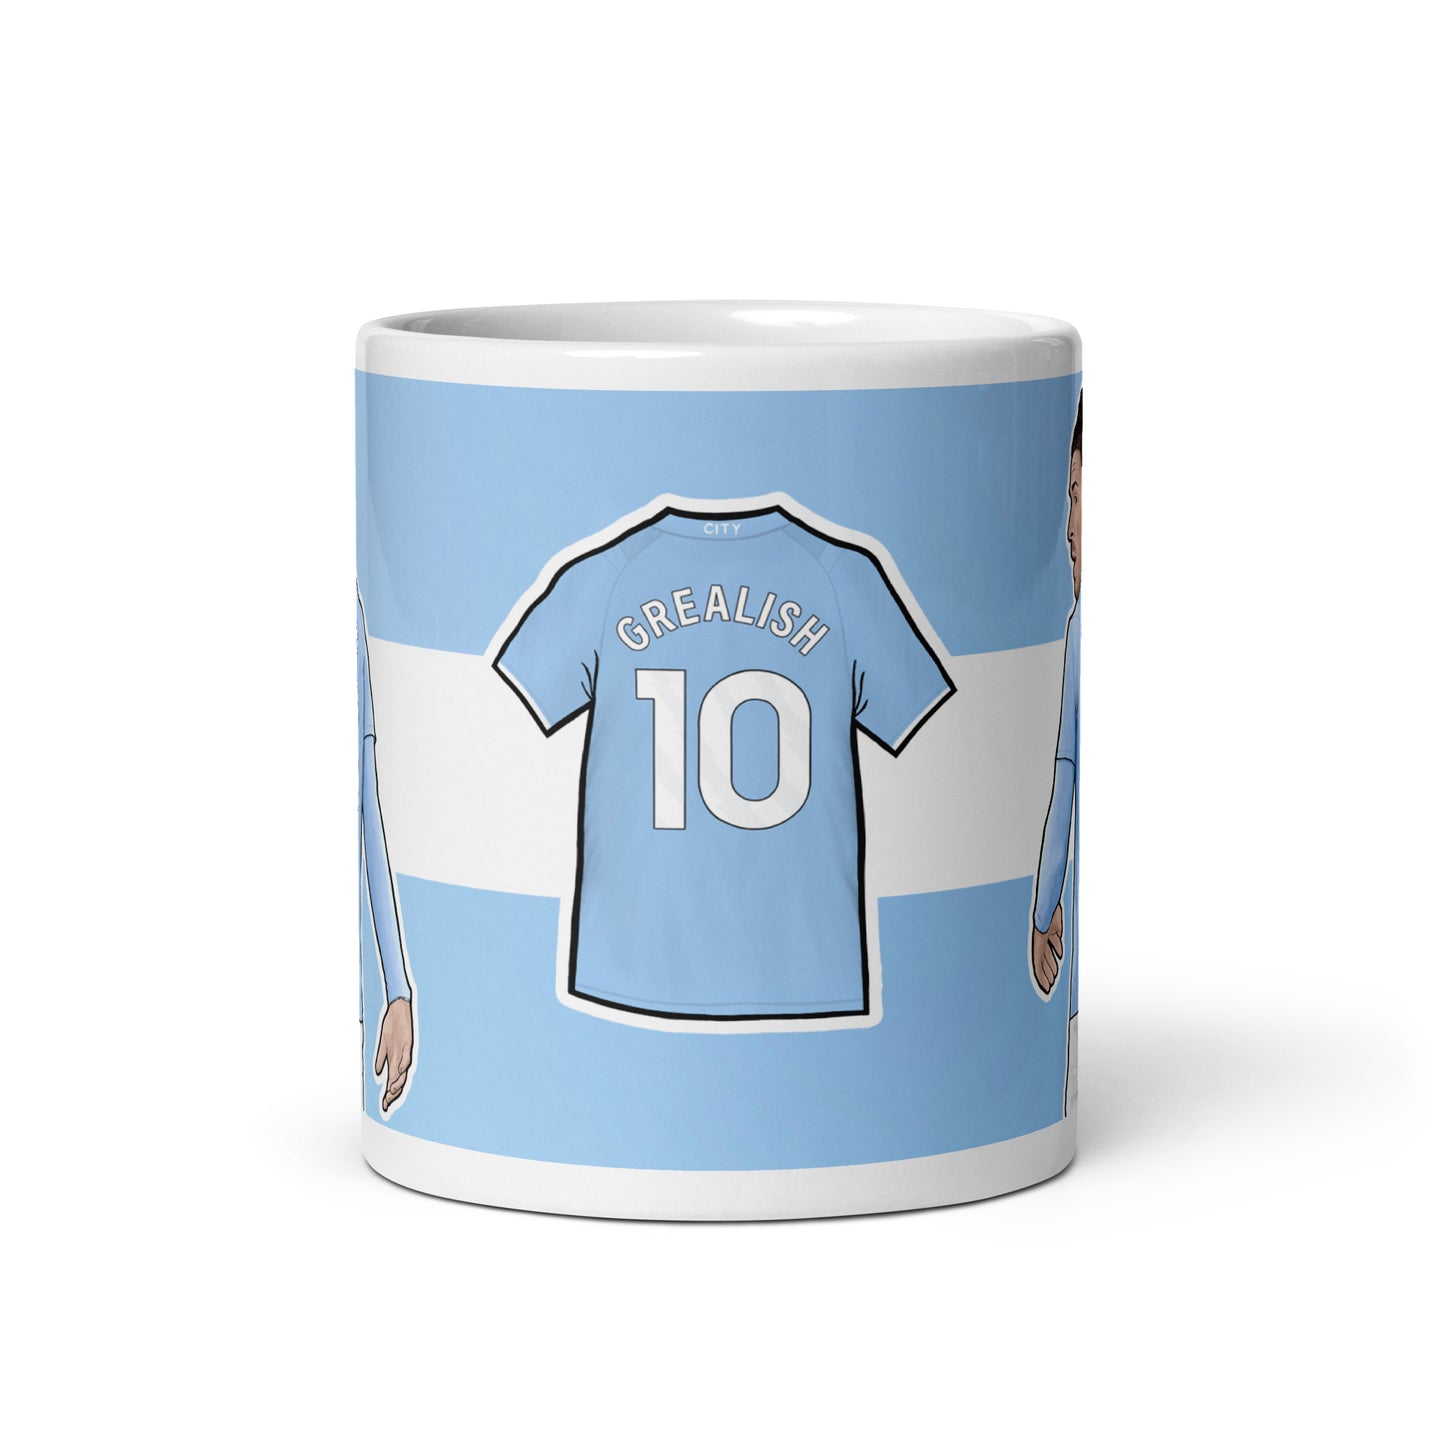 A mug featuring artwork of Manchester City player Jack Grealish